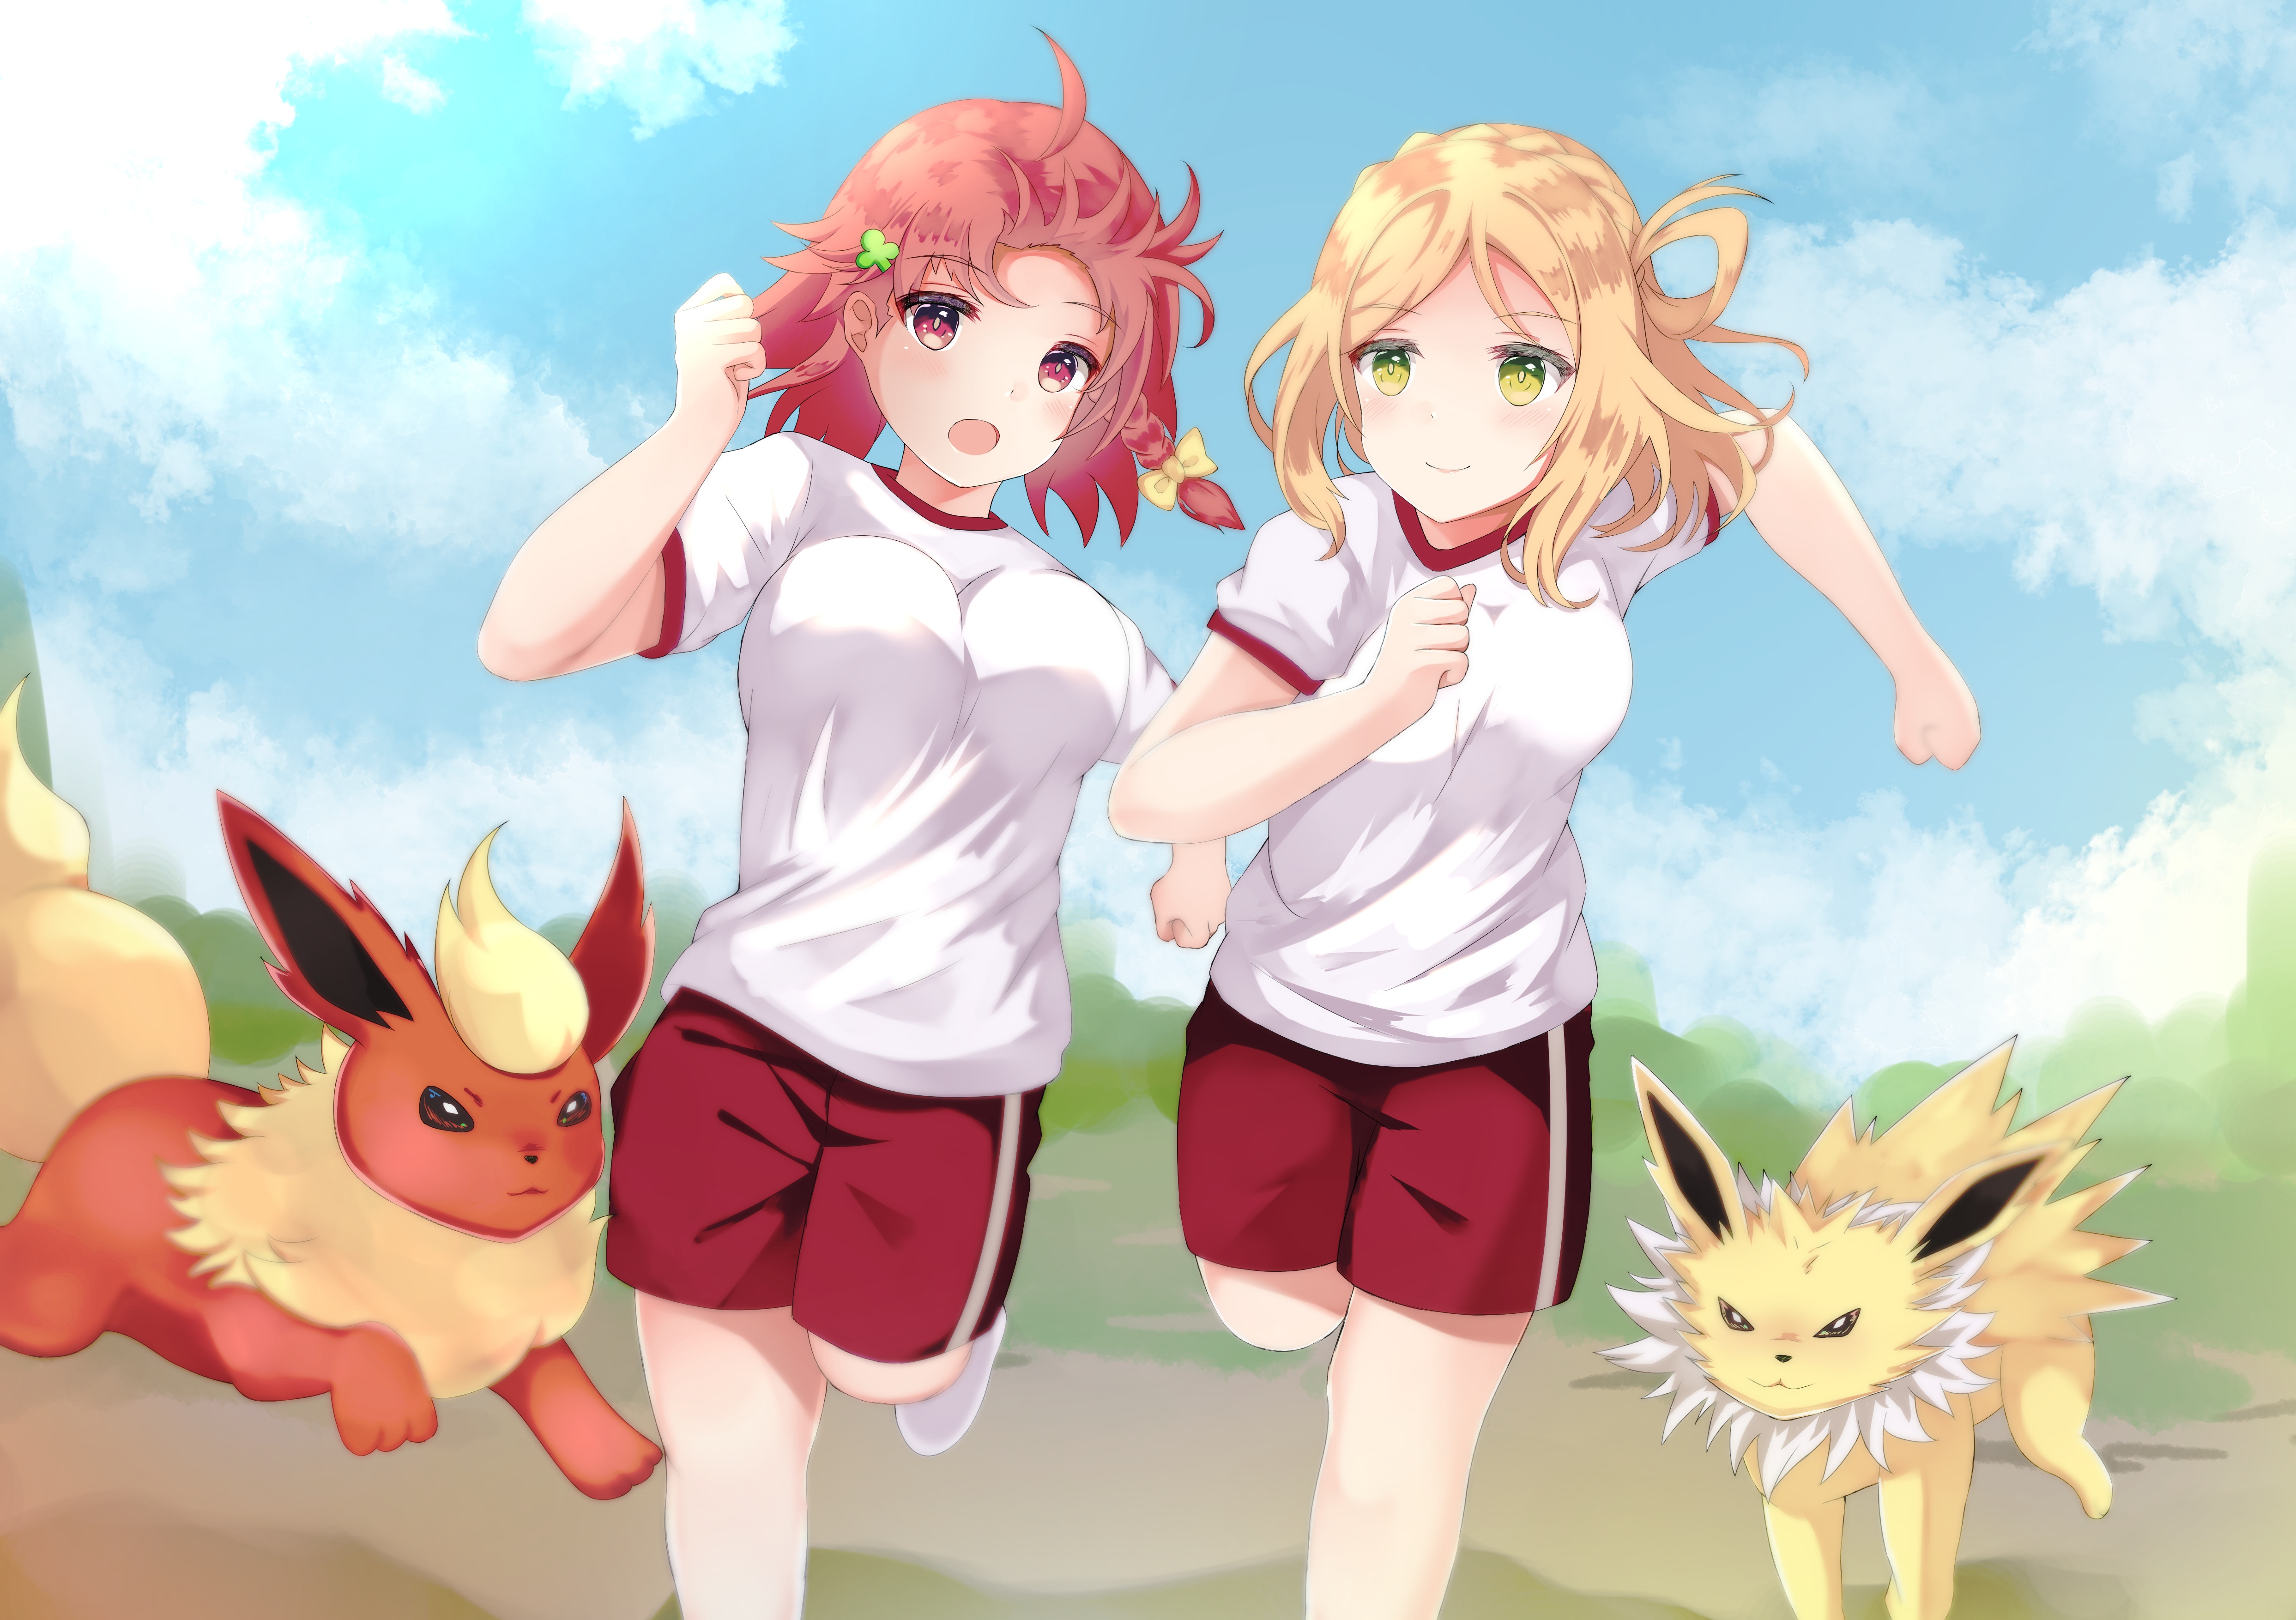 4K Flareon (Pokémon) Wallpaper and Background Image